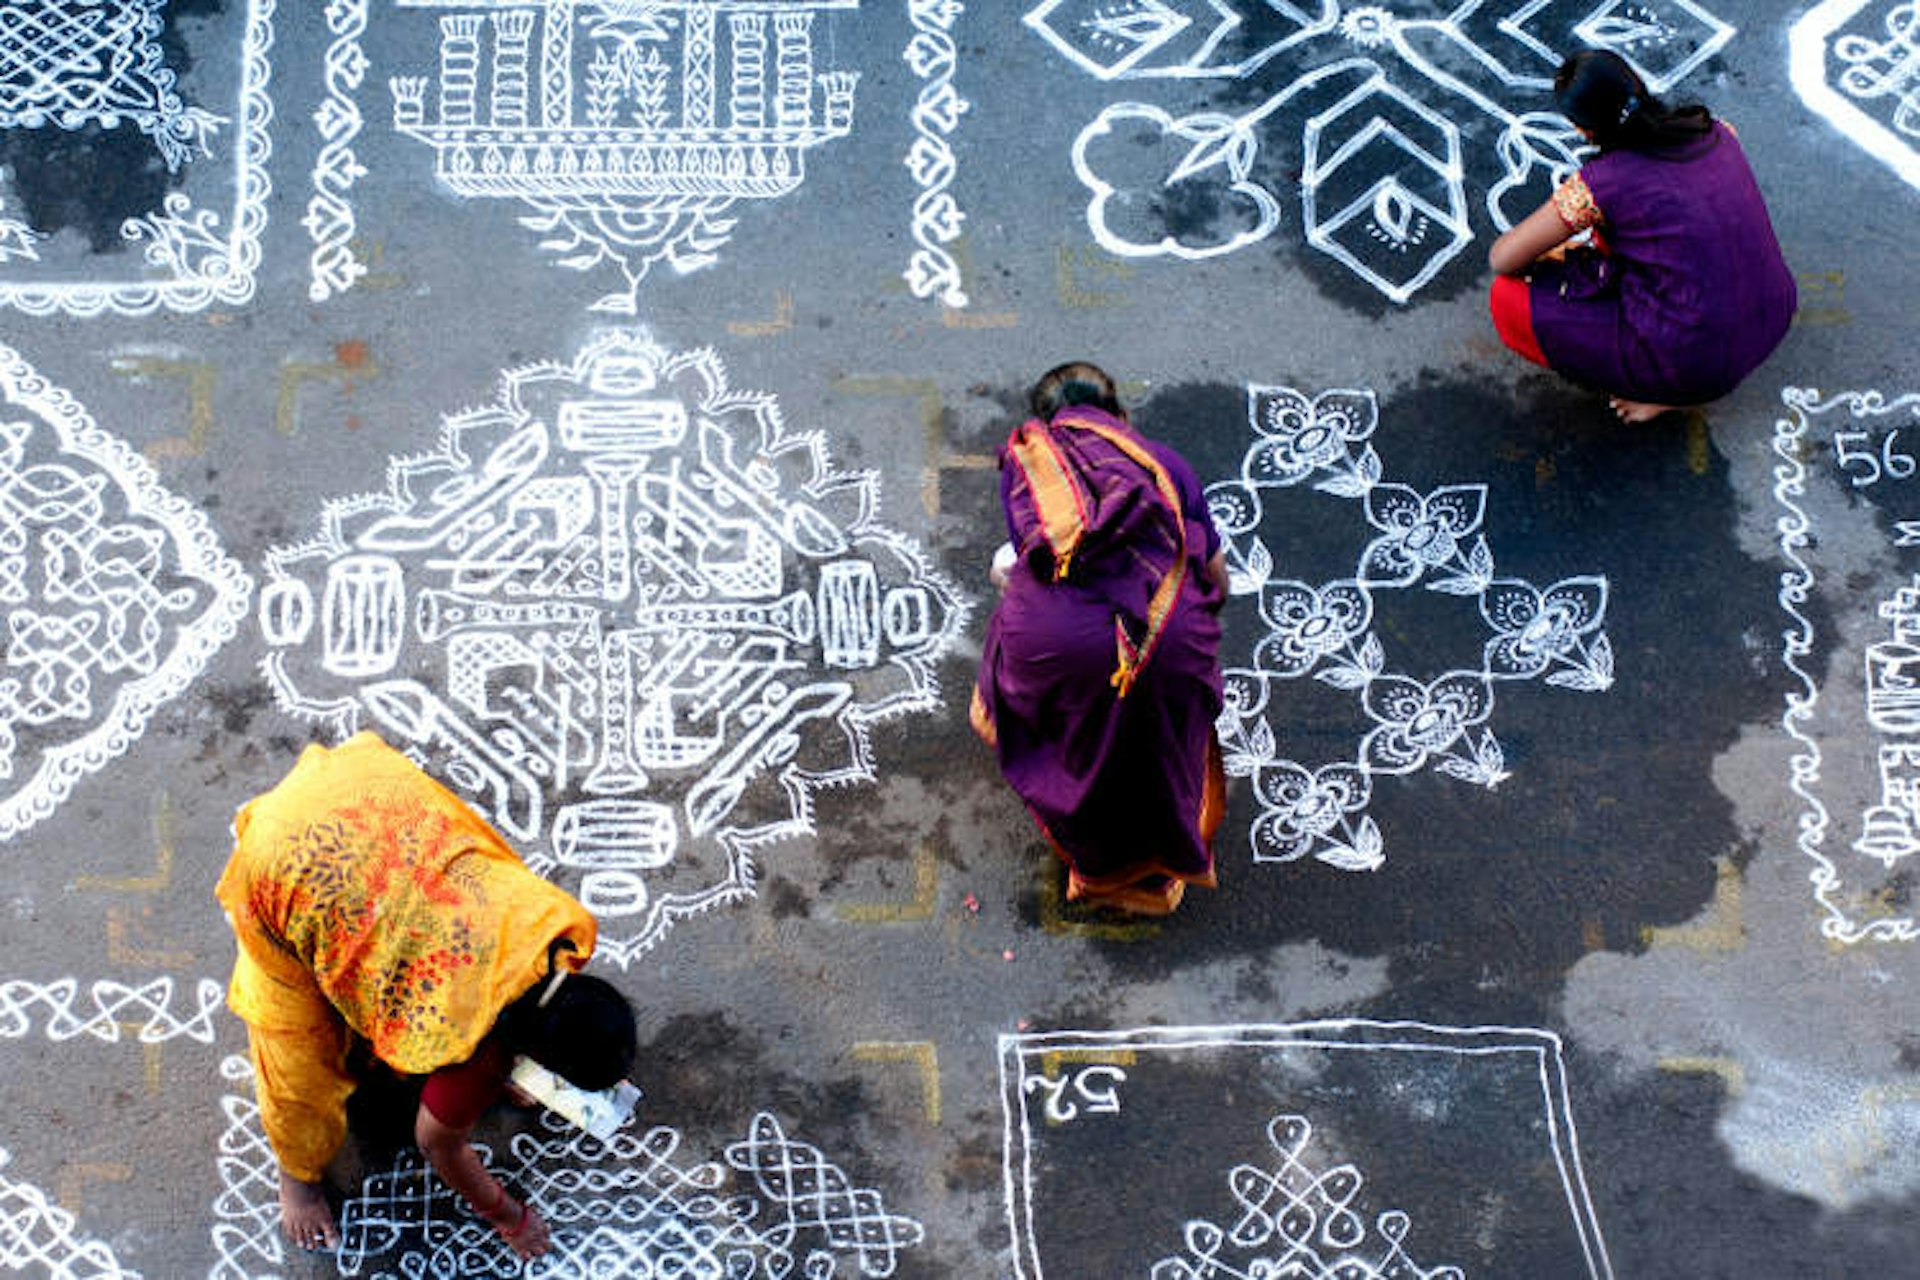 Women mark out rangoli patterns in Mylapore. Image by Srinivasa Krishnan / Getty Images.